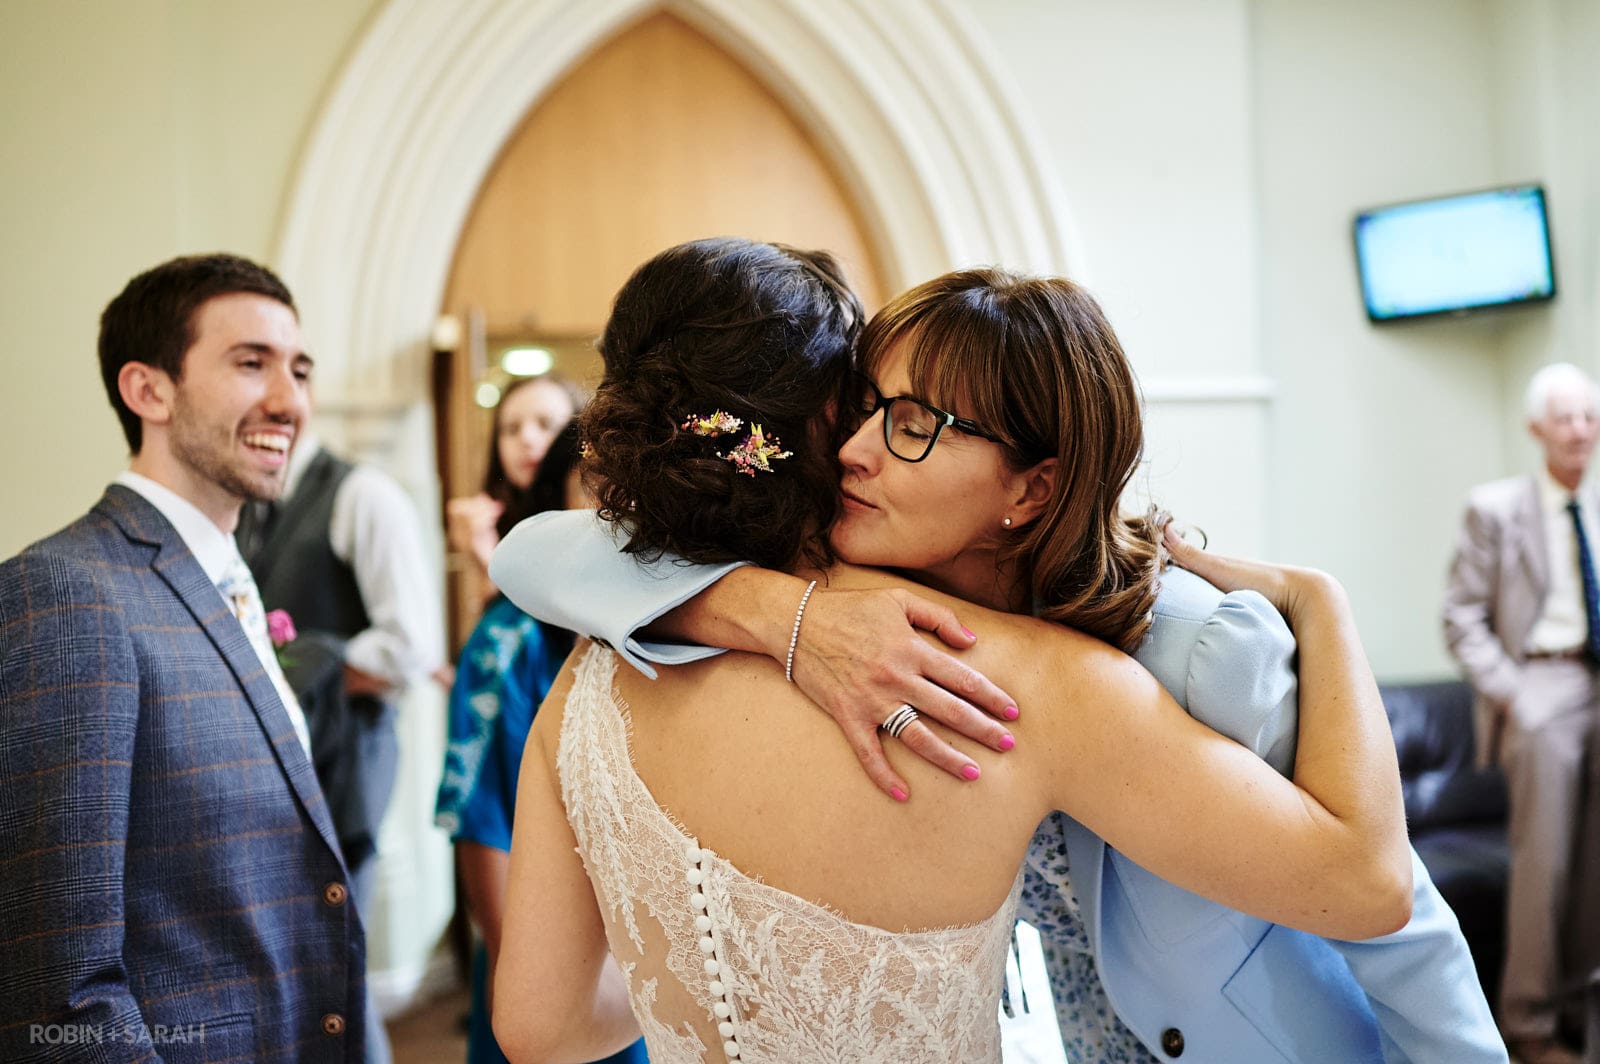 Guest hugs bride after wedding ceremony